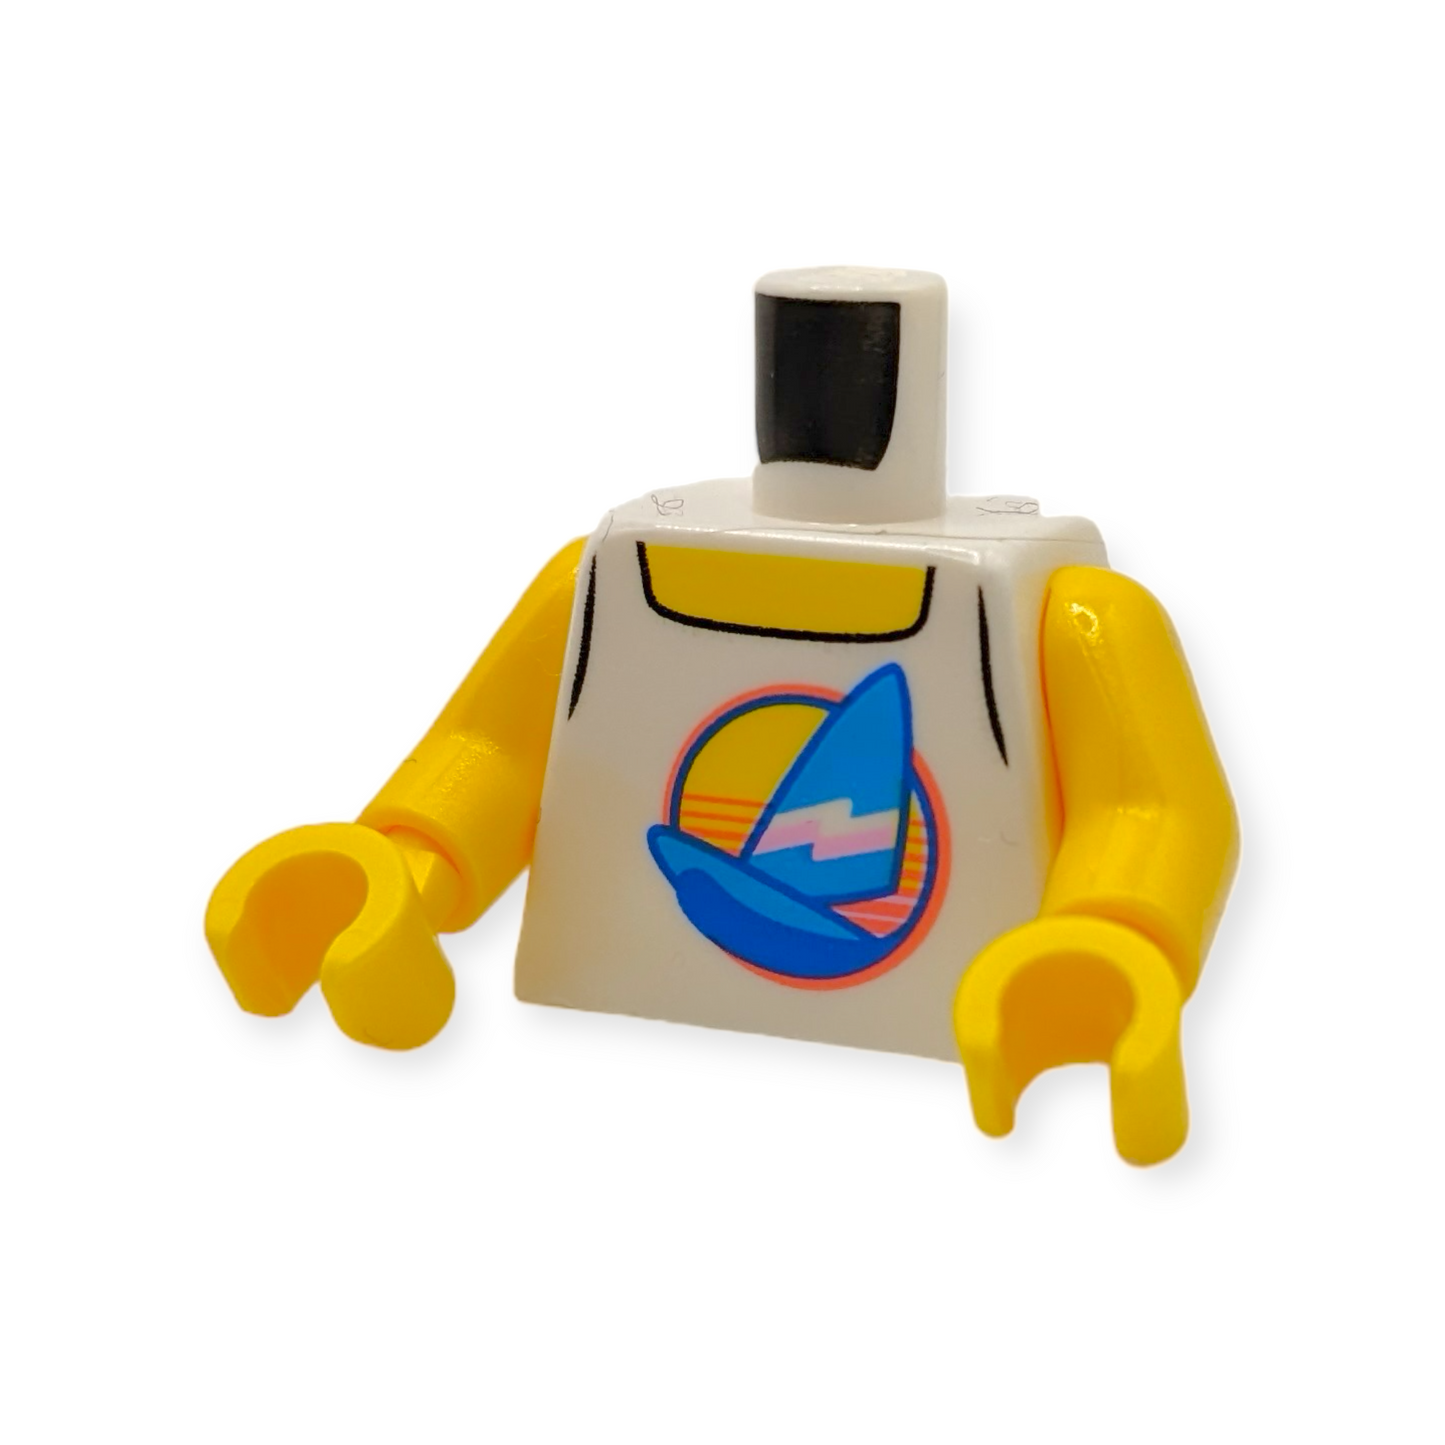 LEGO Torso - 4770 Tank Top with Dark Azure Sailboat